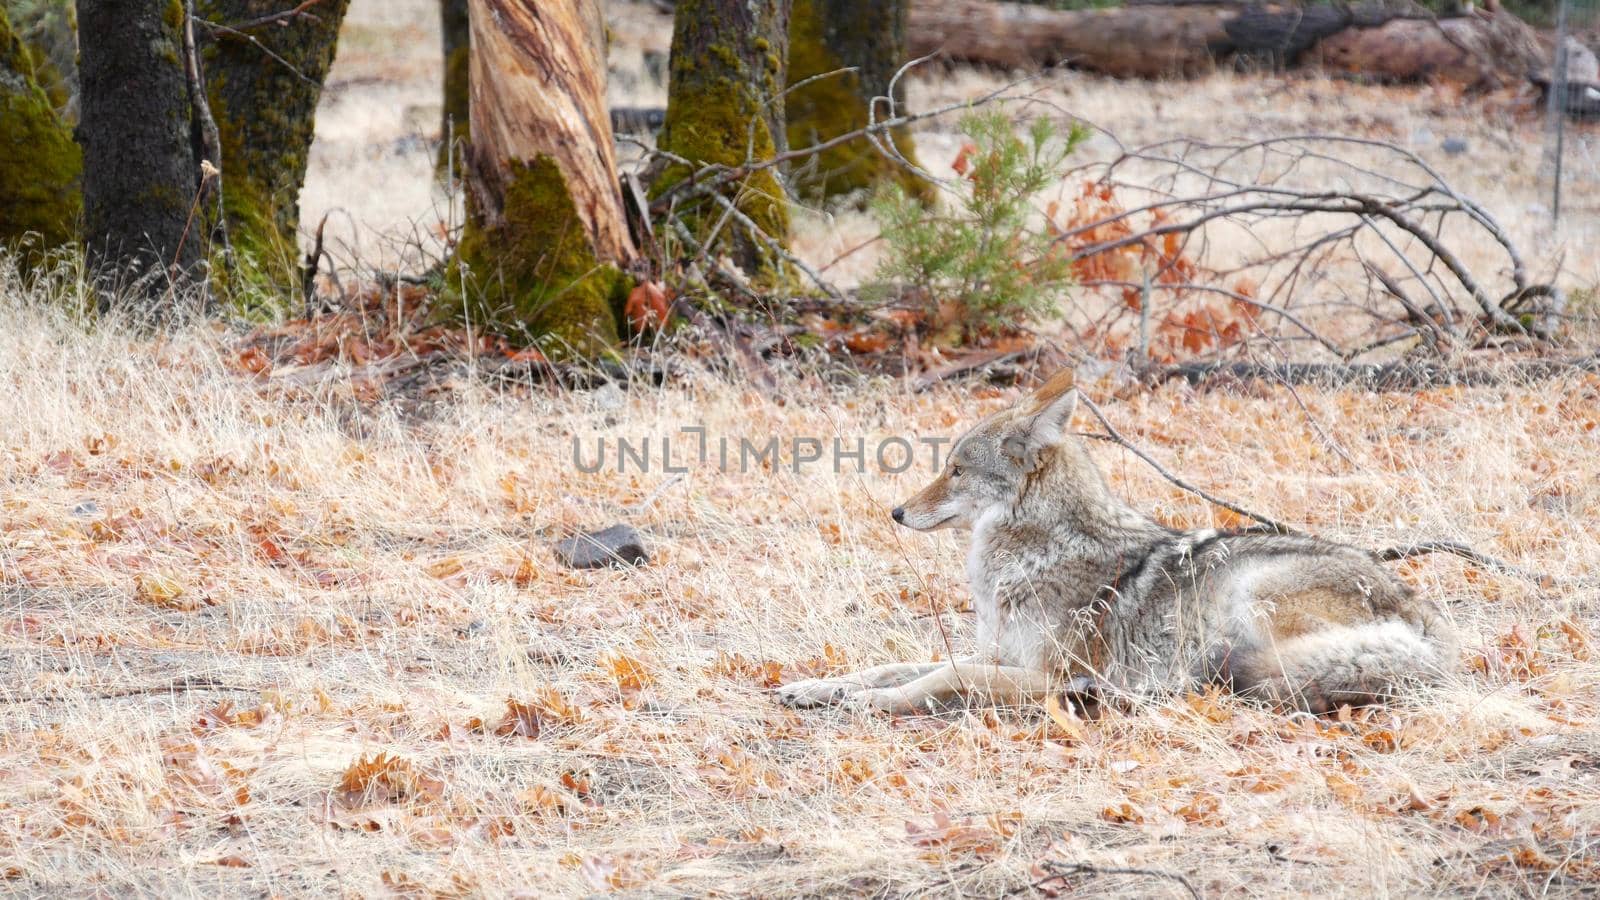 Wild furry wolf, gray coyote or grey coywolf, autumn forest glade, Yosemite national park wildlife, California fauna, USA. Carnivore undomesticated predator, hybrid dog like animal in natural habitat.